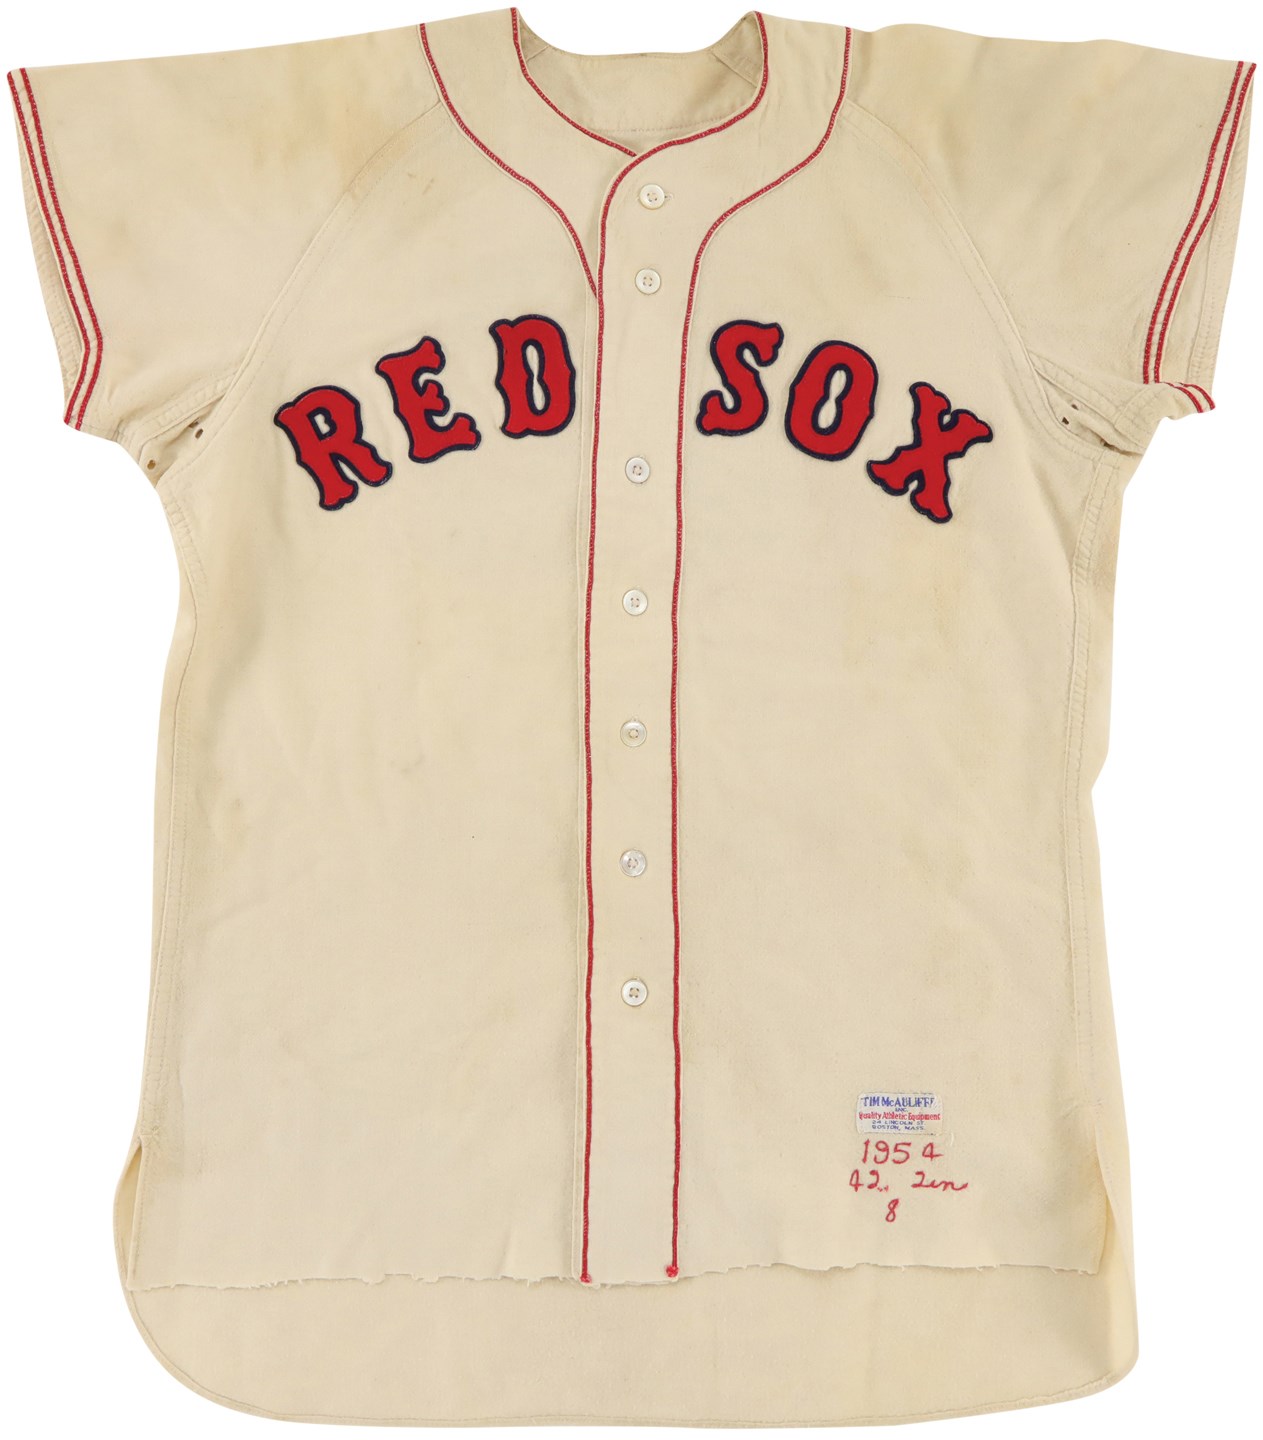 Baseball Equipment - 1954 Boston Red Sox Flannel Jersey